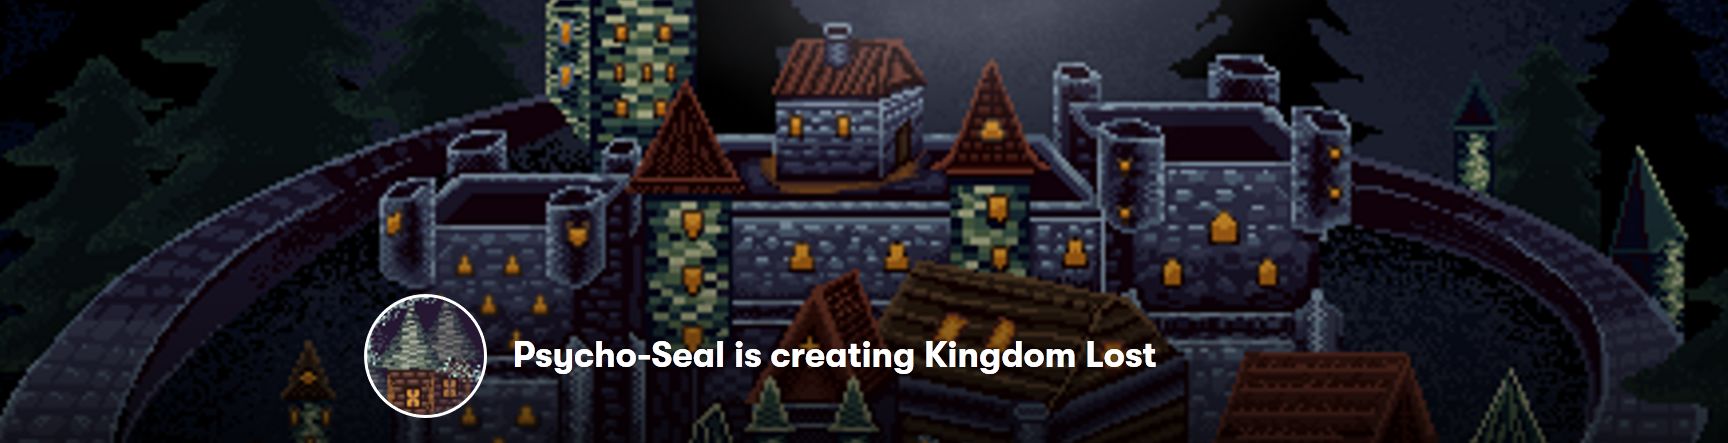 Kingdom Lost - Version 0.4 by Psycho-Seal